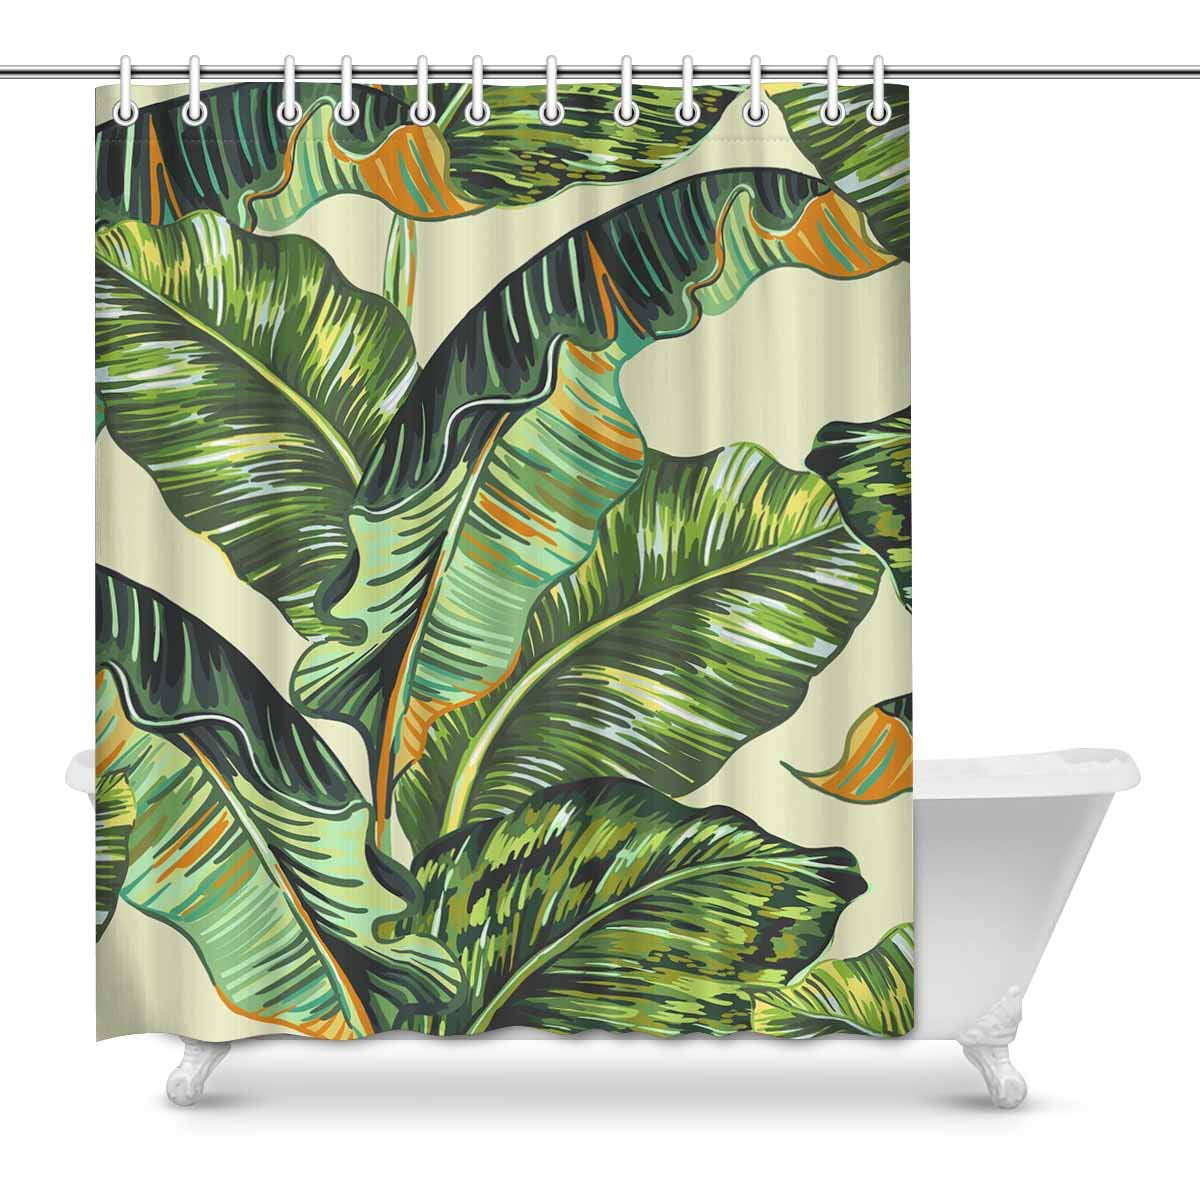 Jungle Banana Leaves Design Bathroom Bath Waterproof Fabric Shower Curtain Set